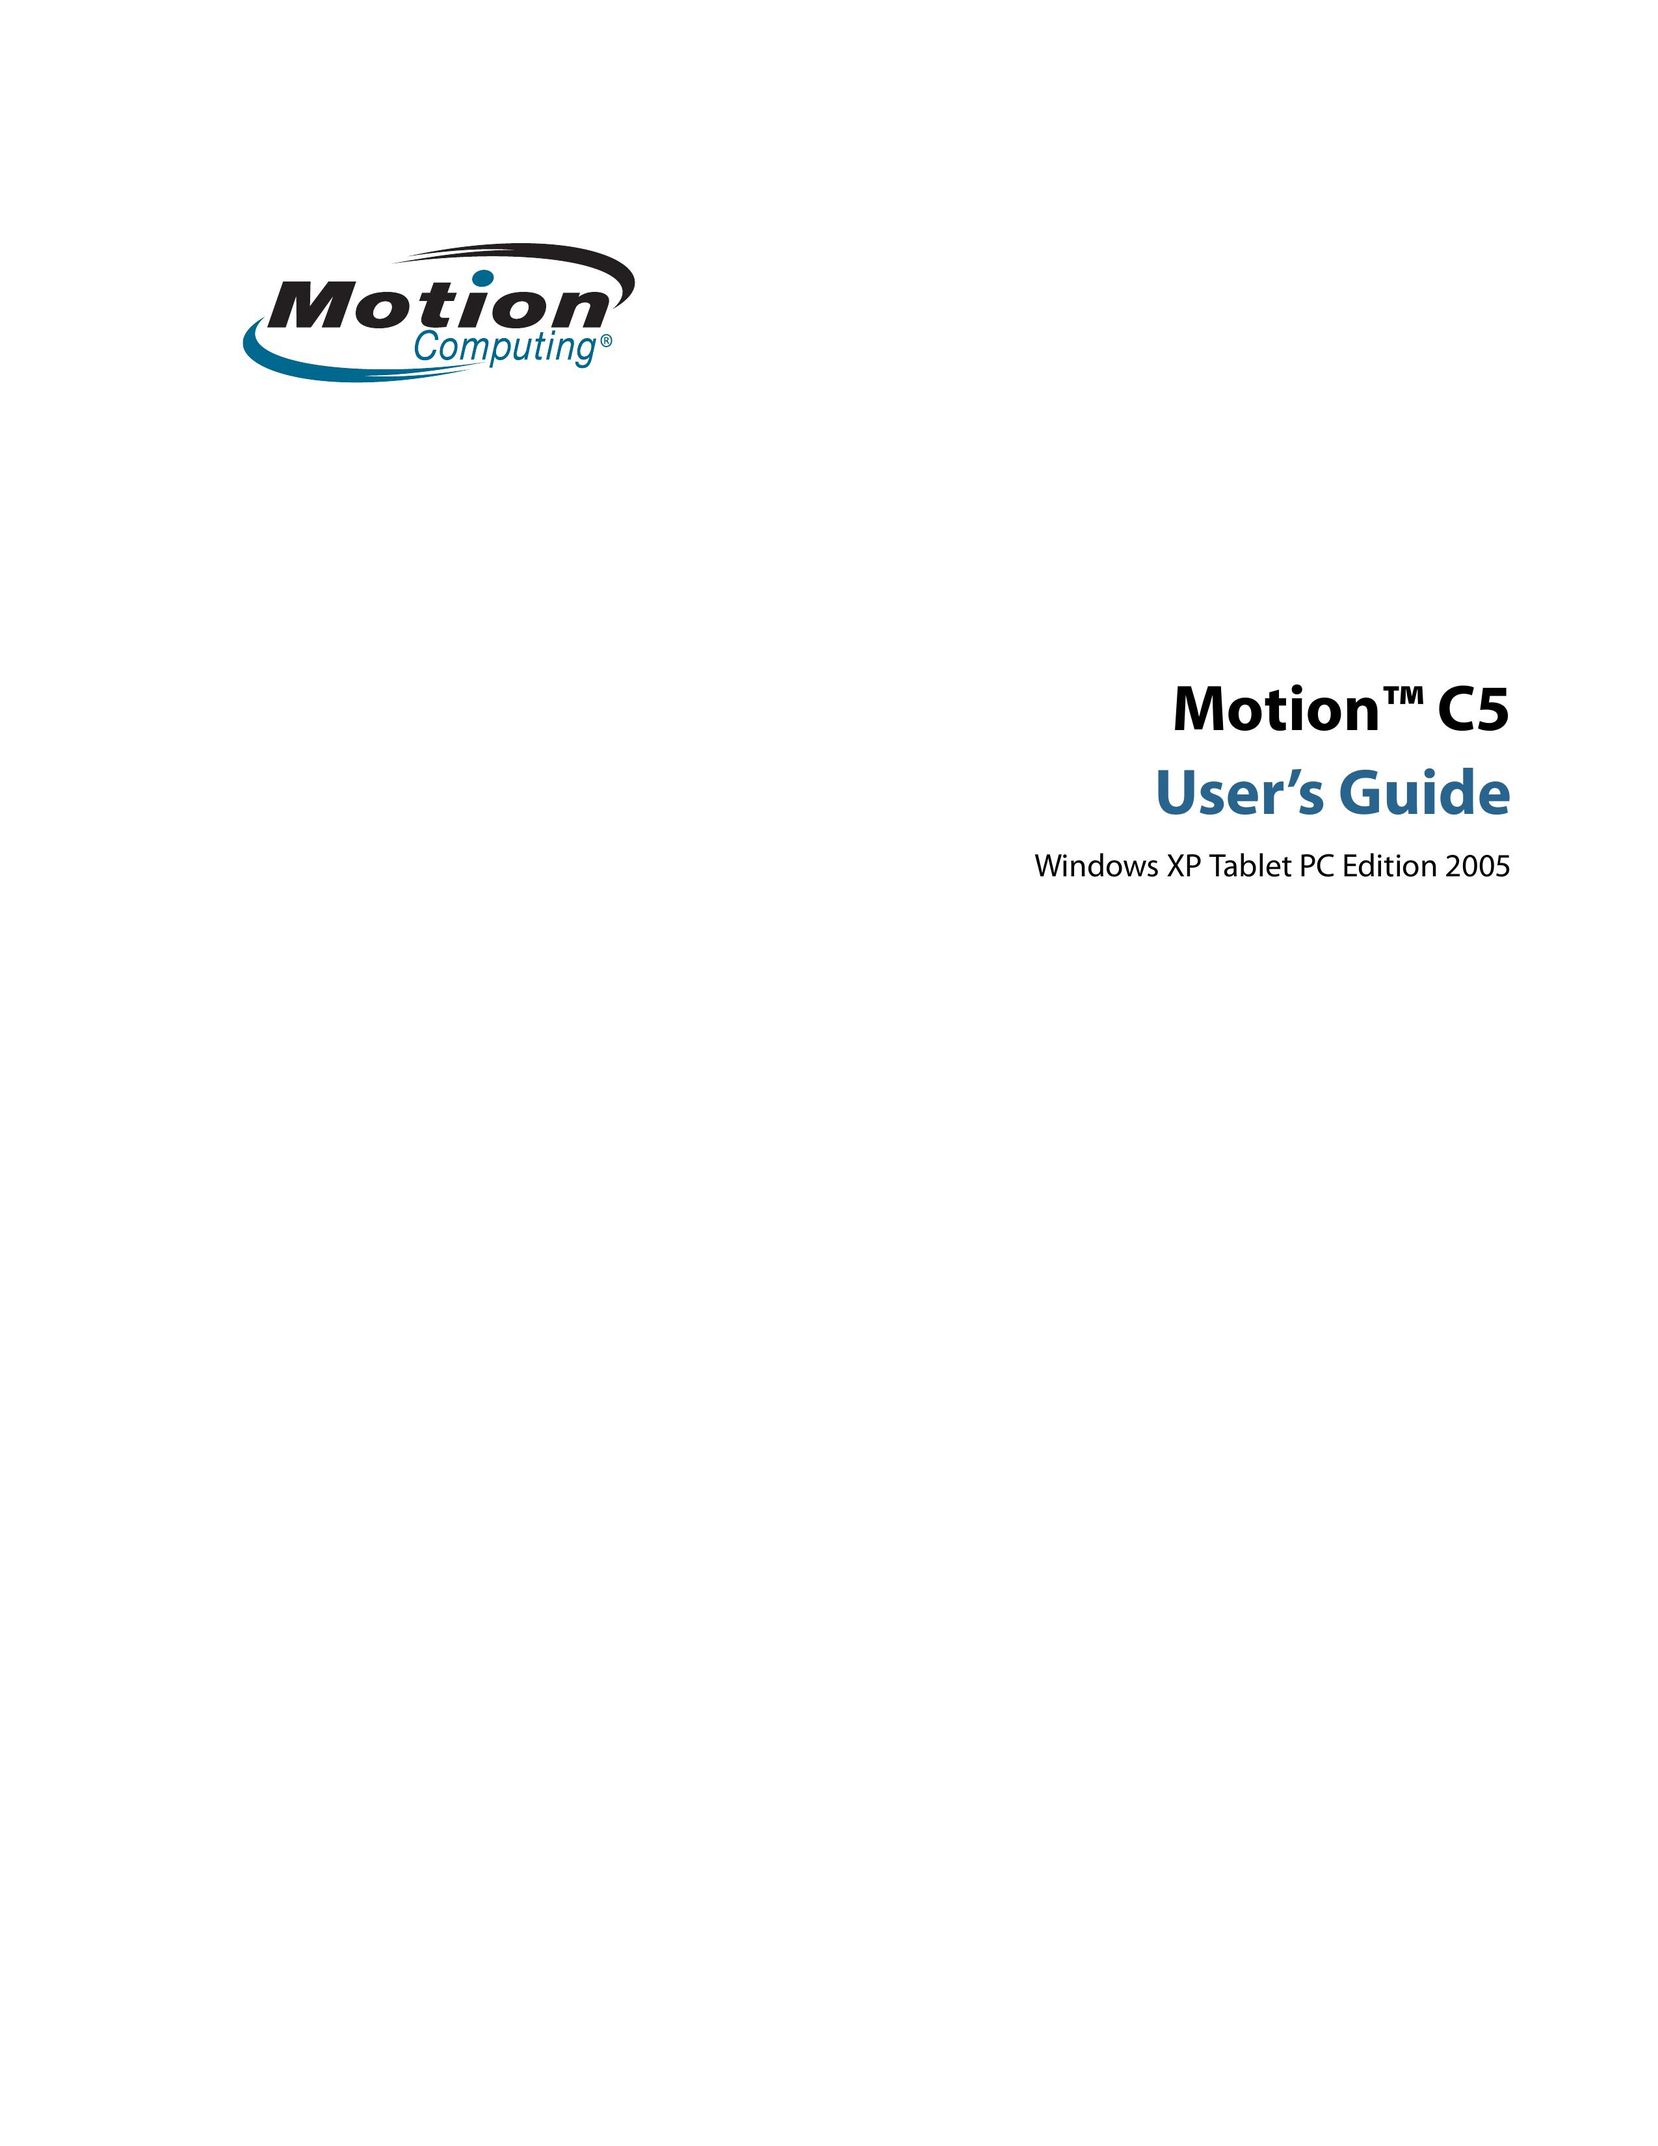 Motion Computing C5 Kitchen Entertainment Center User Manual